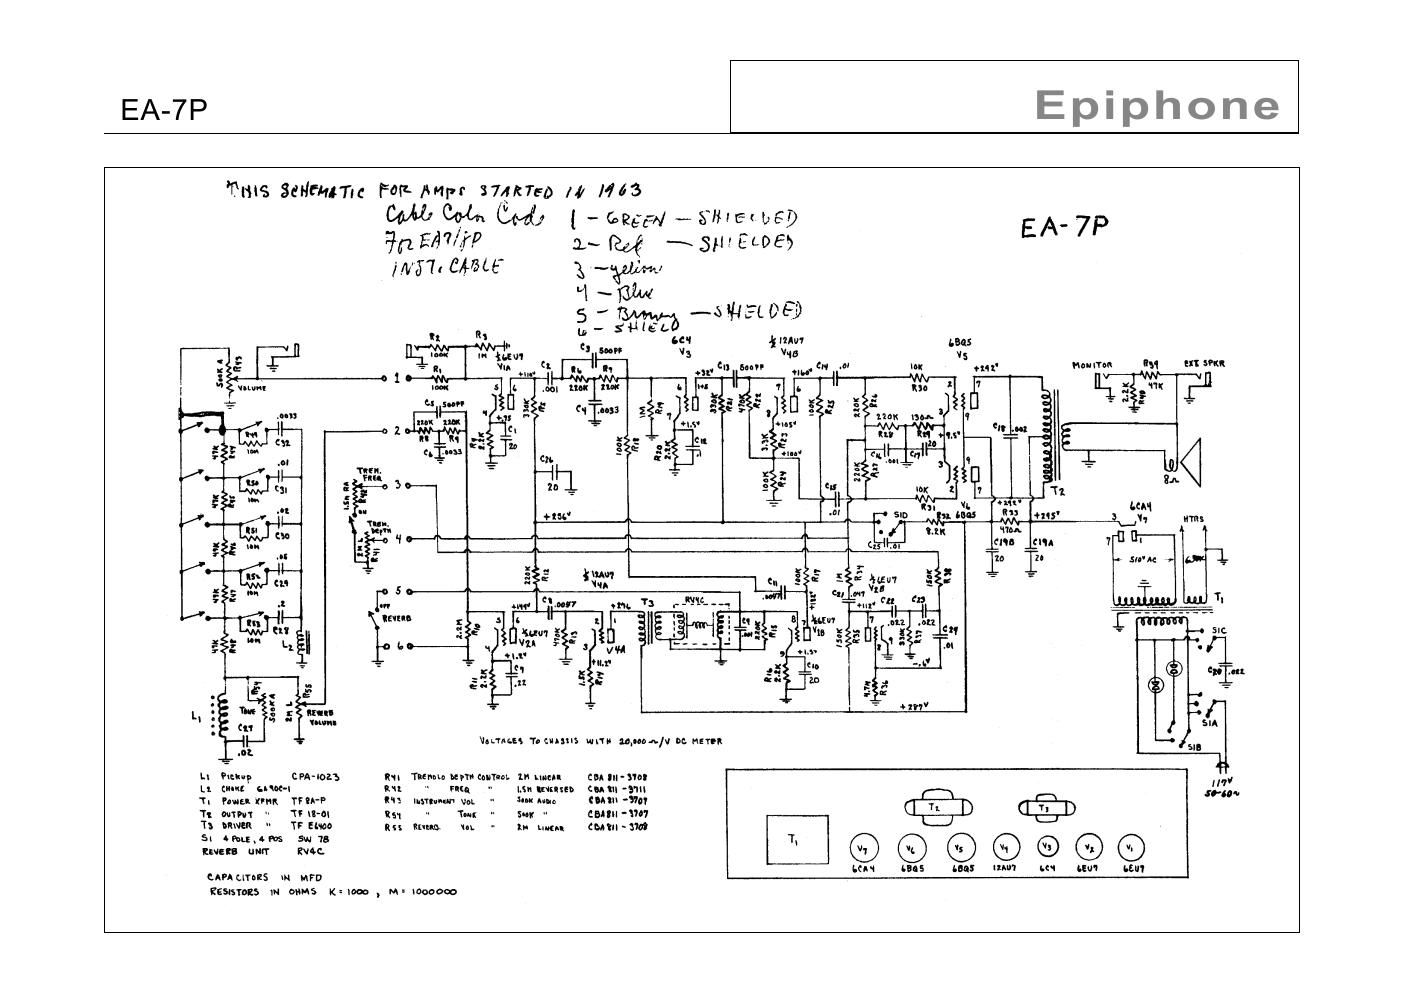 epiphone ea 7p the professional schematic